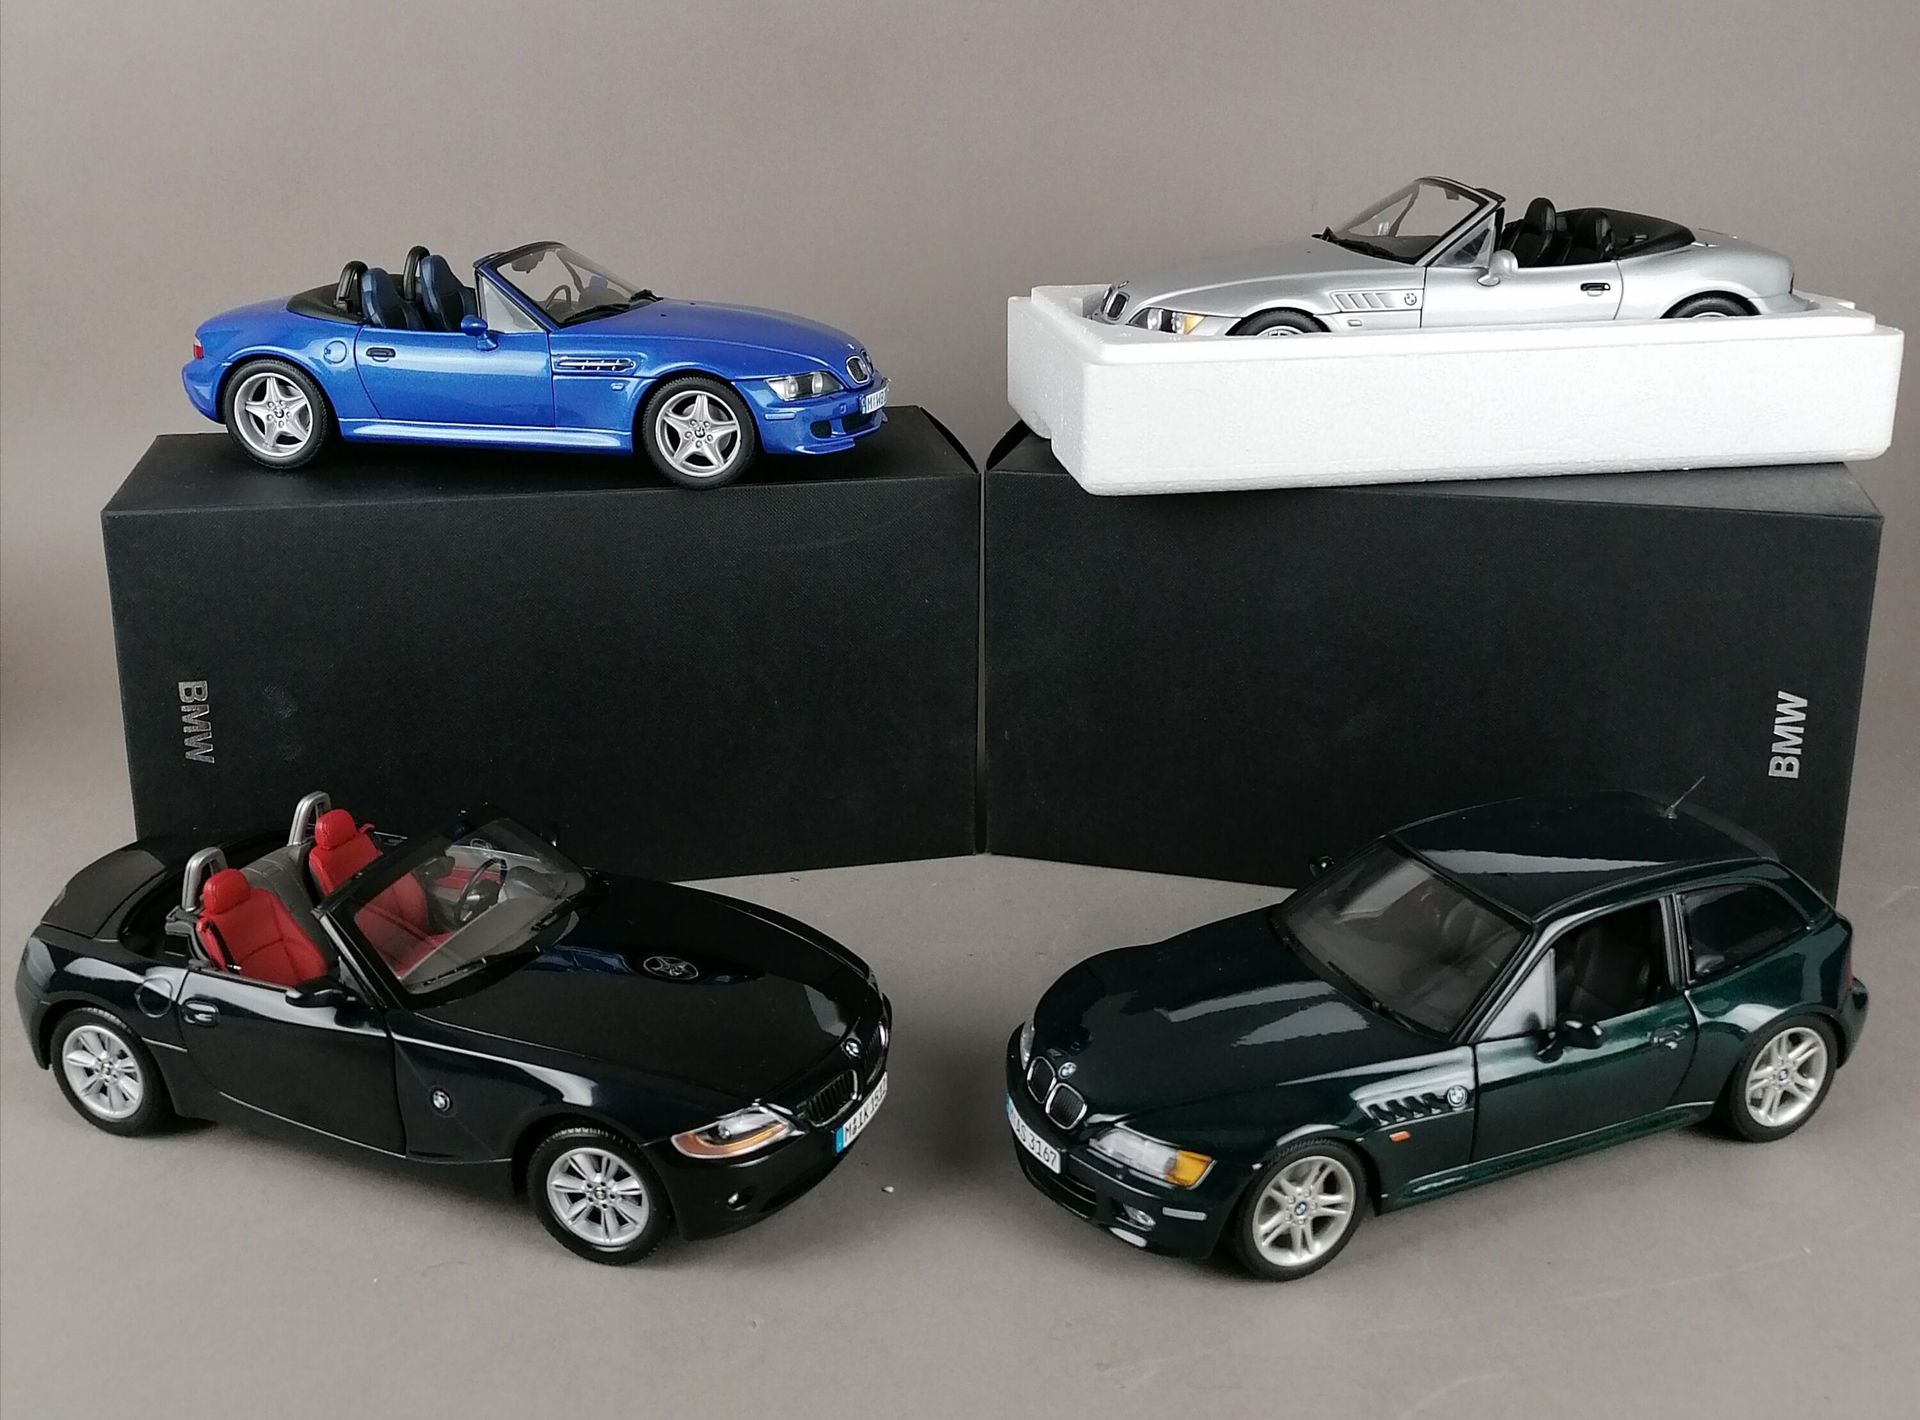 Null BMW - FOUR BMW 1/18 scale :

1x M Roadster

1x Z3 Roadster 1.8

1x M Coupé
&hellip;